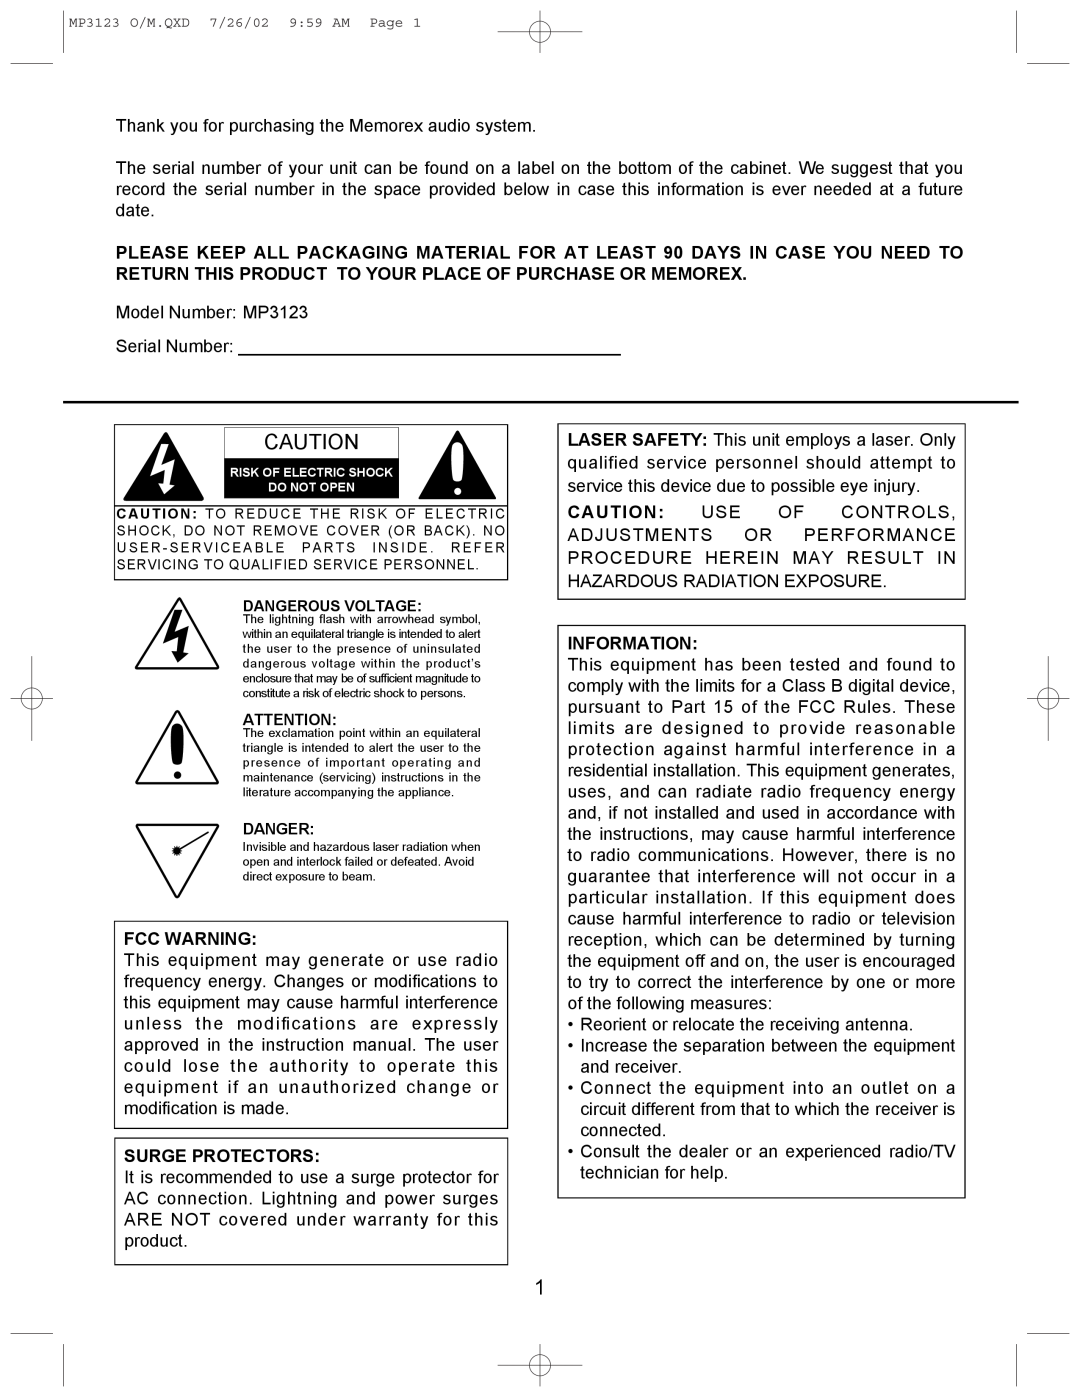 Memorex MP3123 manual Fcc Warning, Surge Protectors, Information 